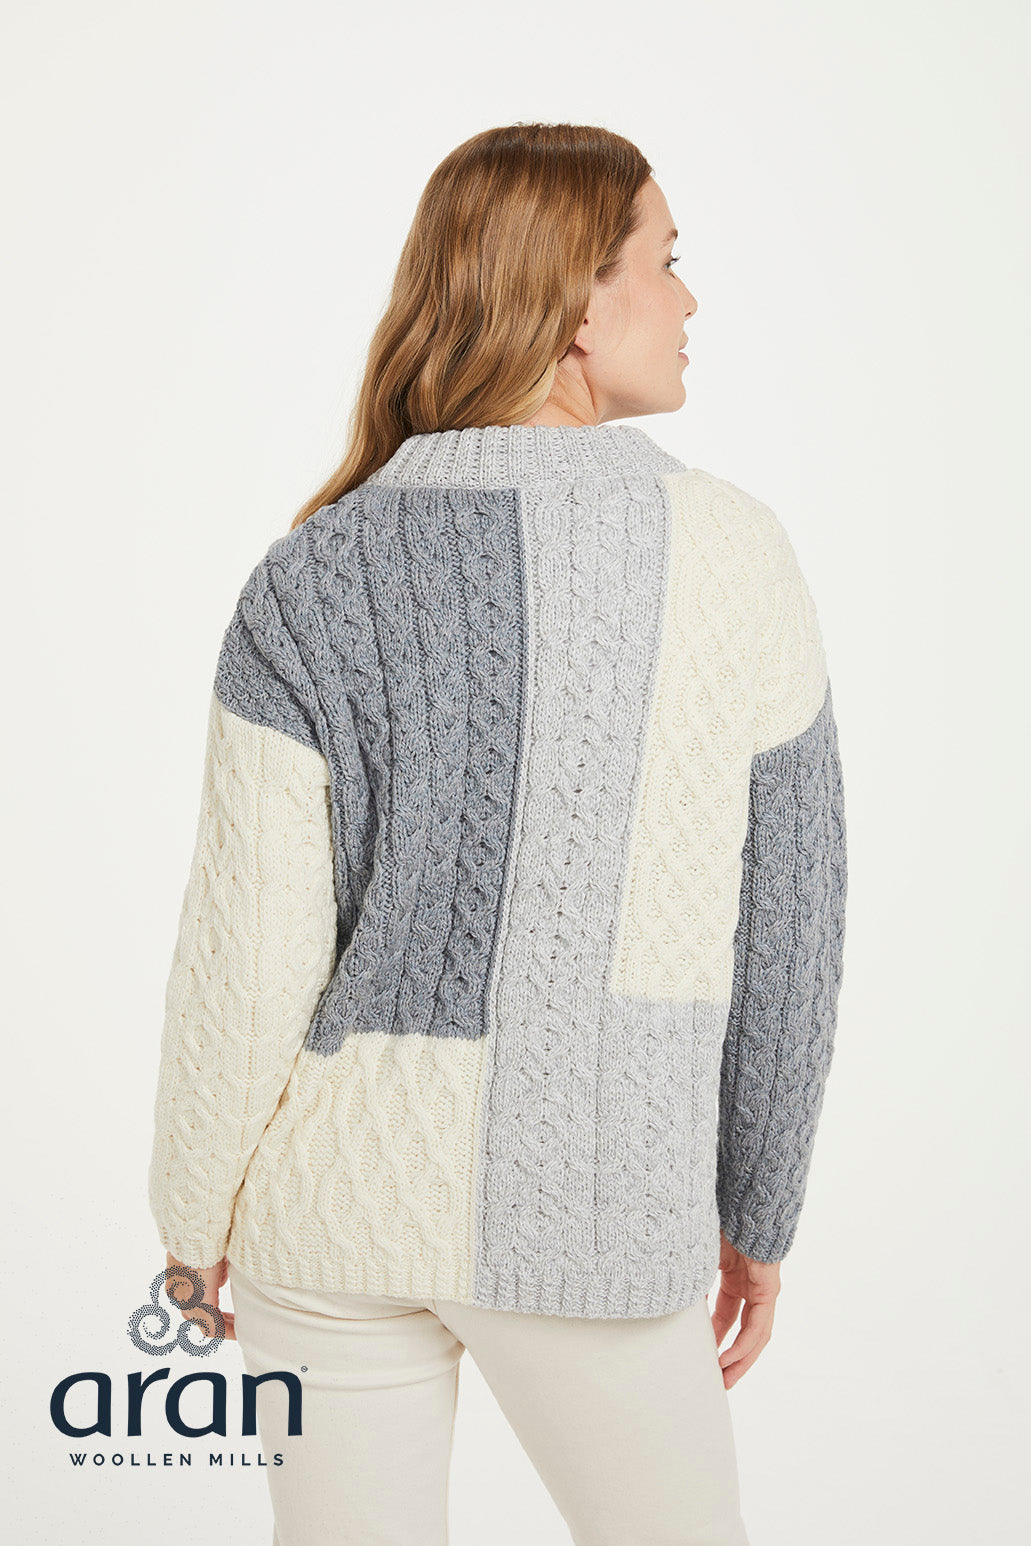 Aran Patchwork Sweater